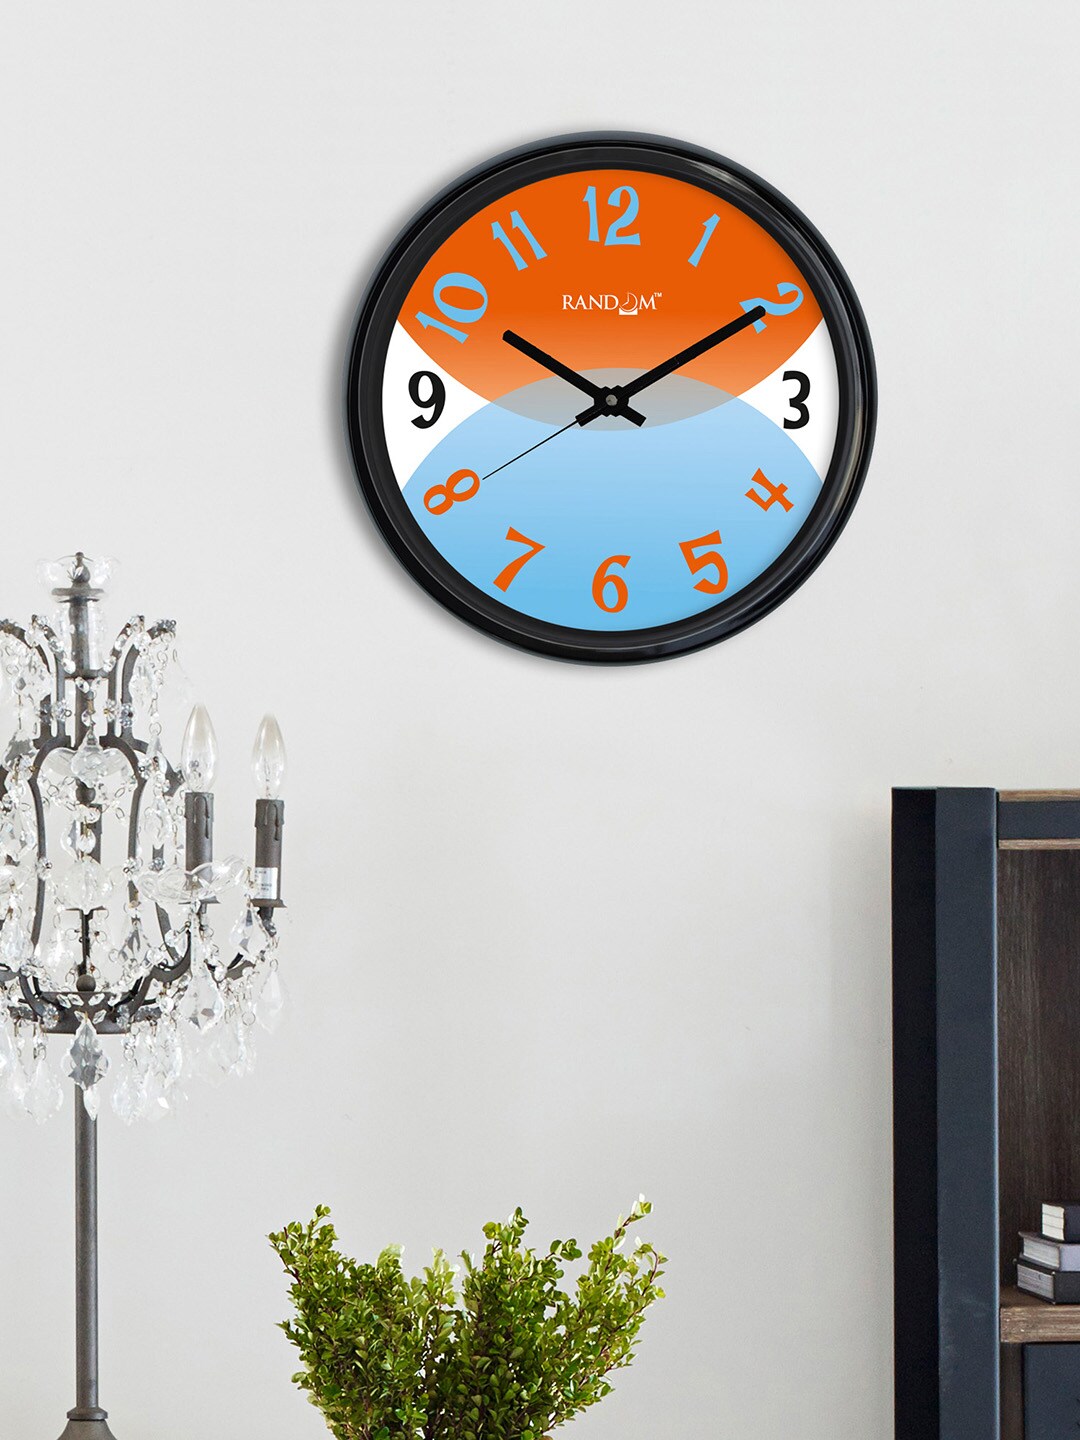 RANDOM Orange Round Solid 30.48 cm Analogue Wall Clock Price in India